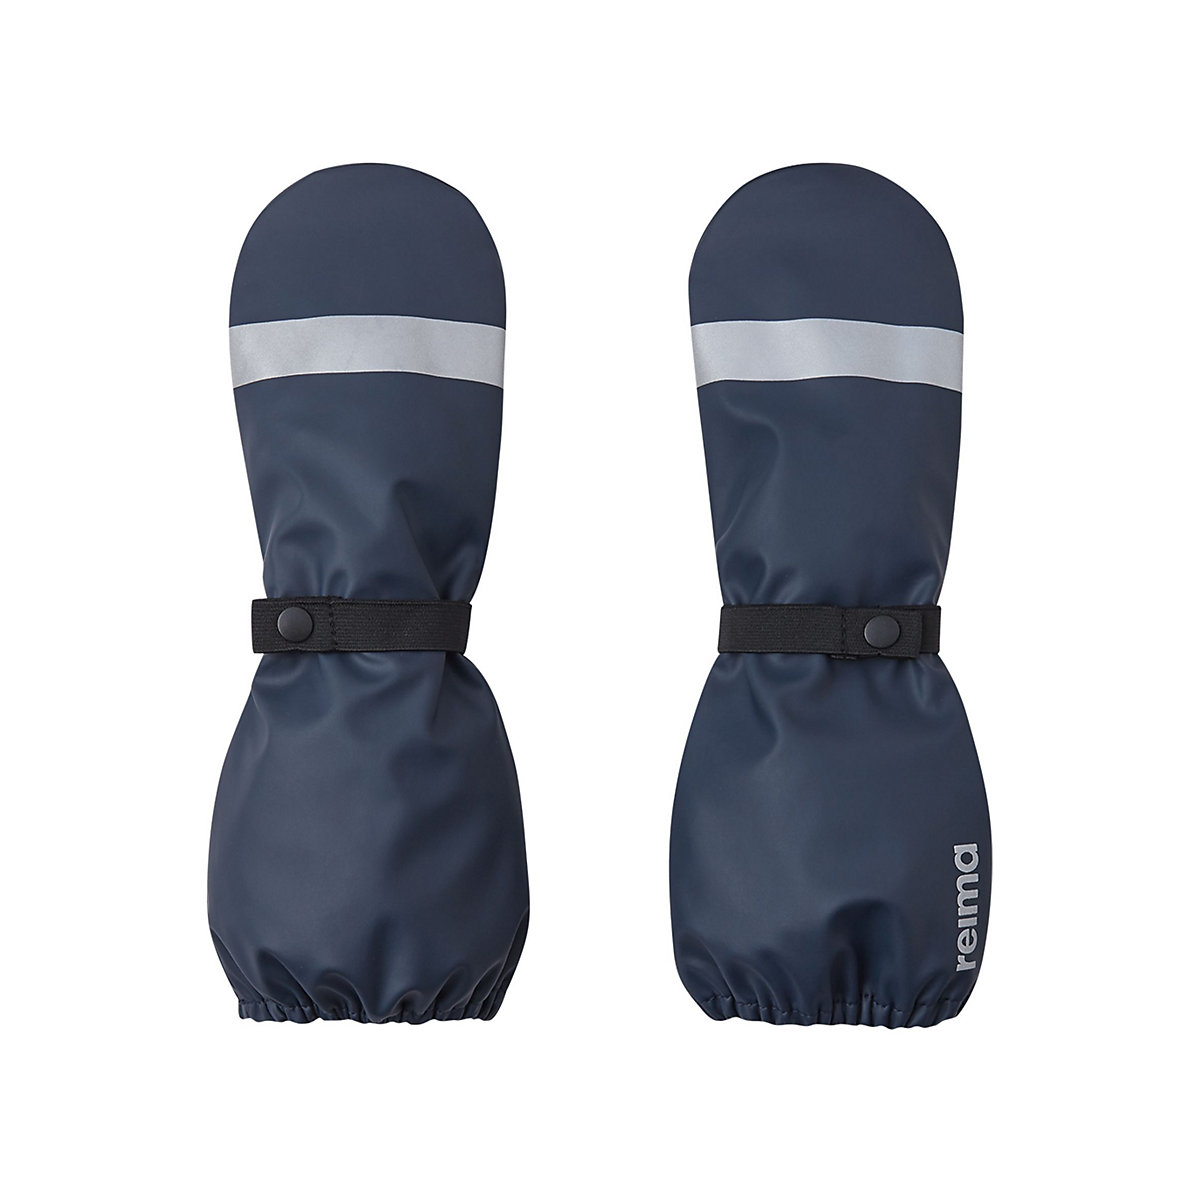 Reima Regenhandschuhe Kura Fausthandschuhe für Kinder blau